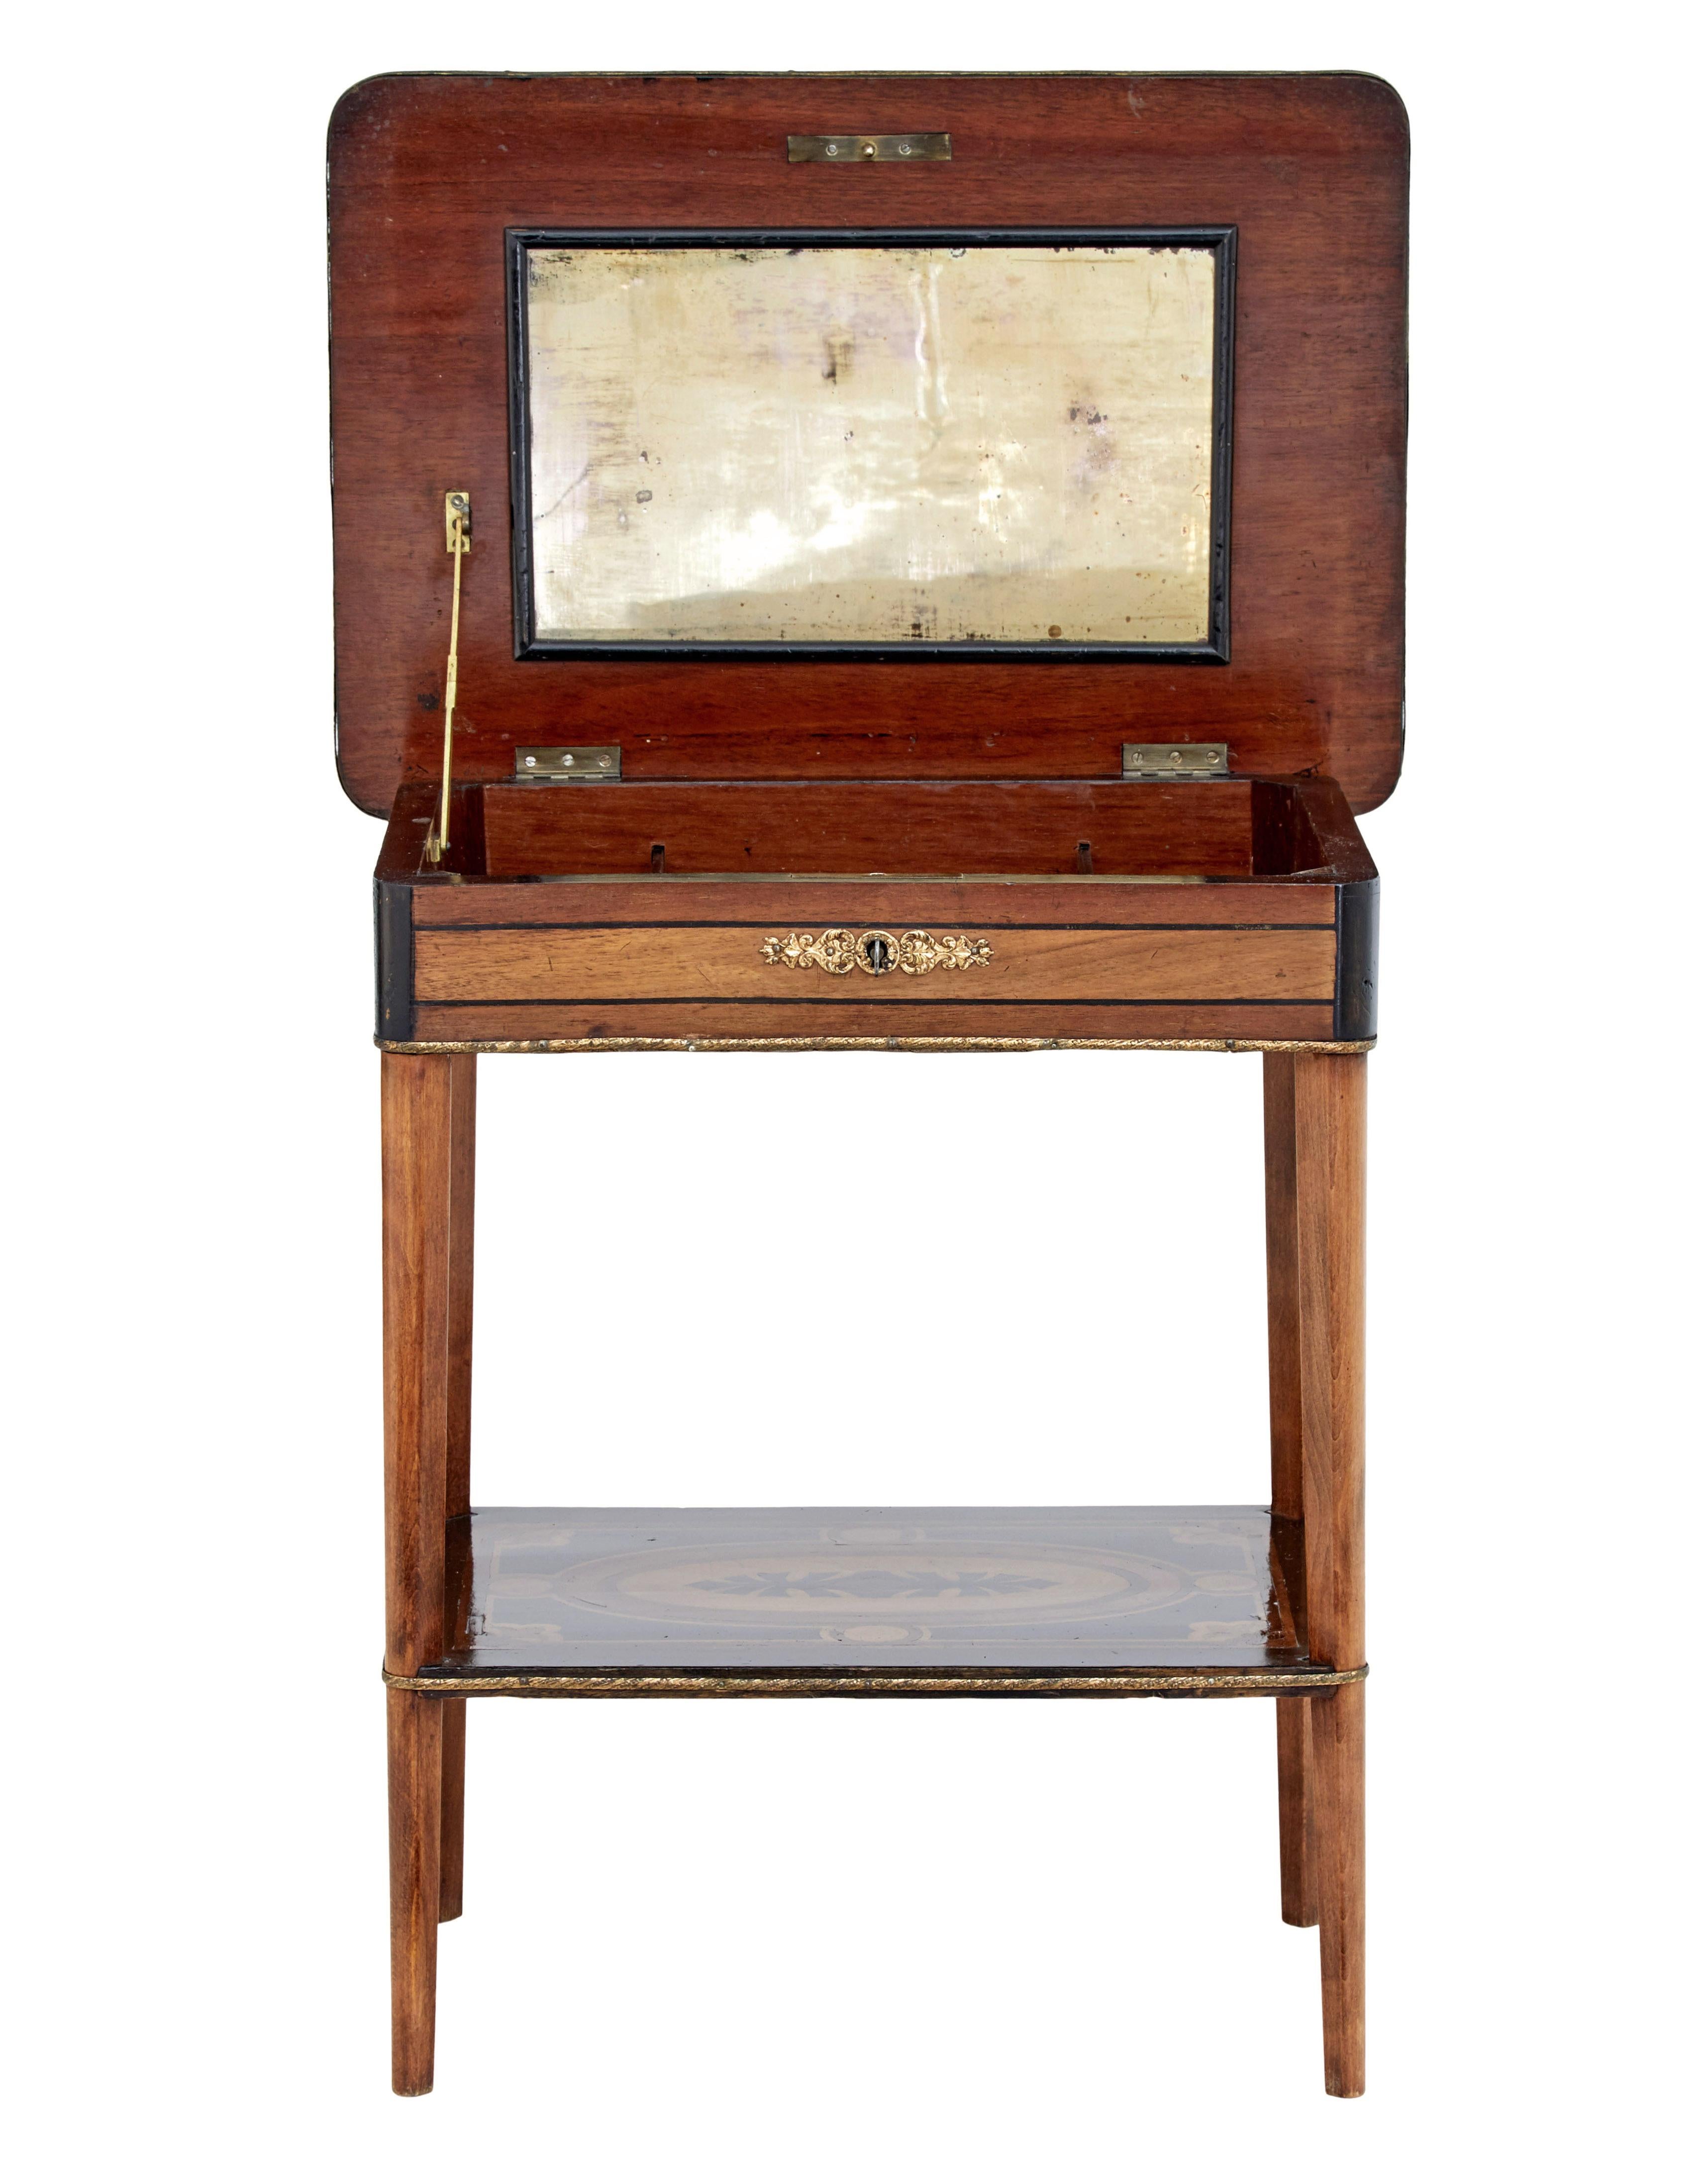 Ebonized 19th Century Mahogany Inlaid Work Table For Sale